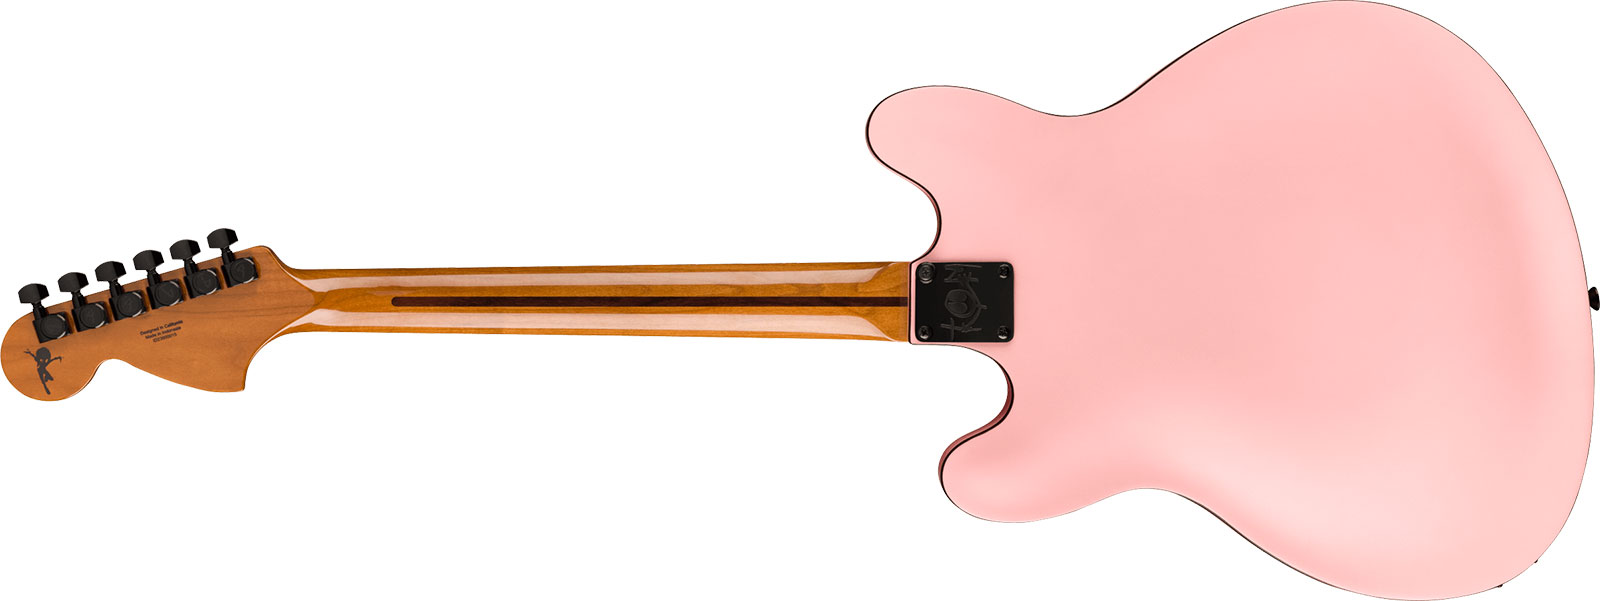 Fender Tom Delonge Starcaster Signature 1h Seymour Duncan Ht Rw - Satin Shell Pink - Semi-hollow electric guitar - Variation 1